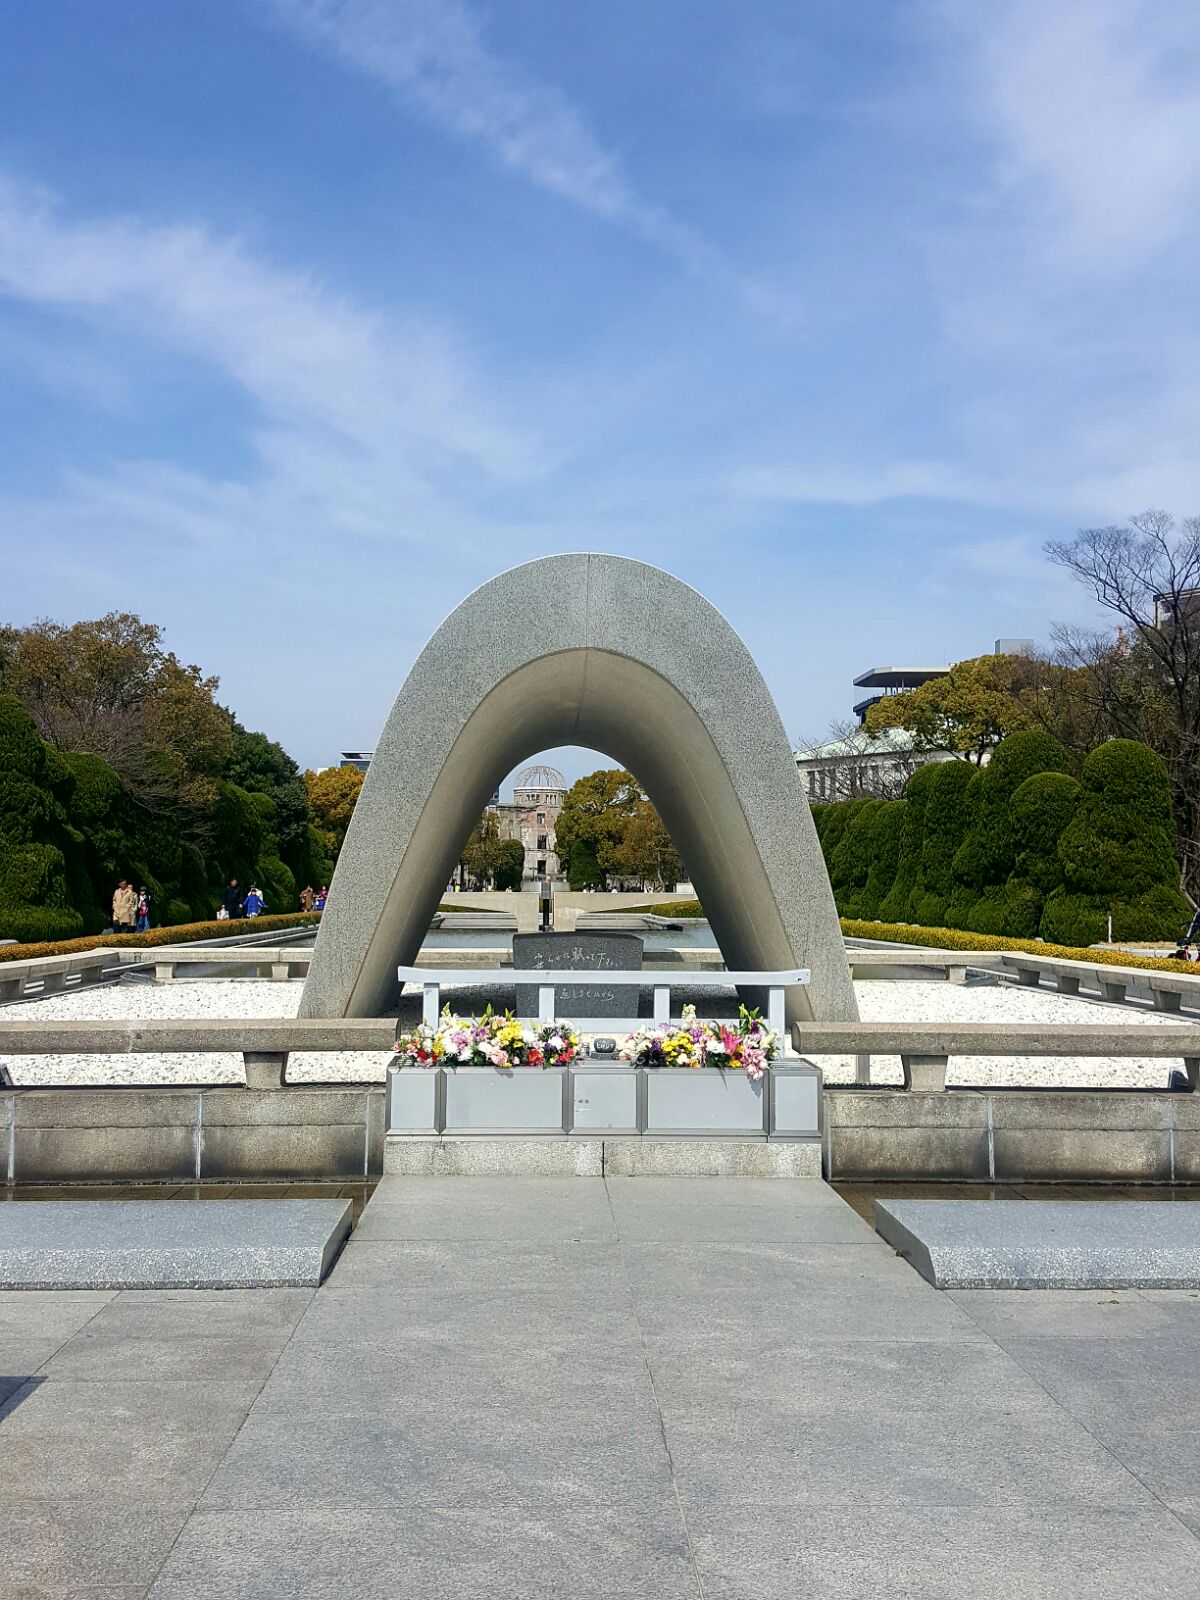 Another Heartbreaking City – Hiroshima